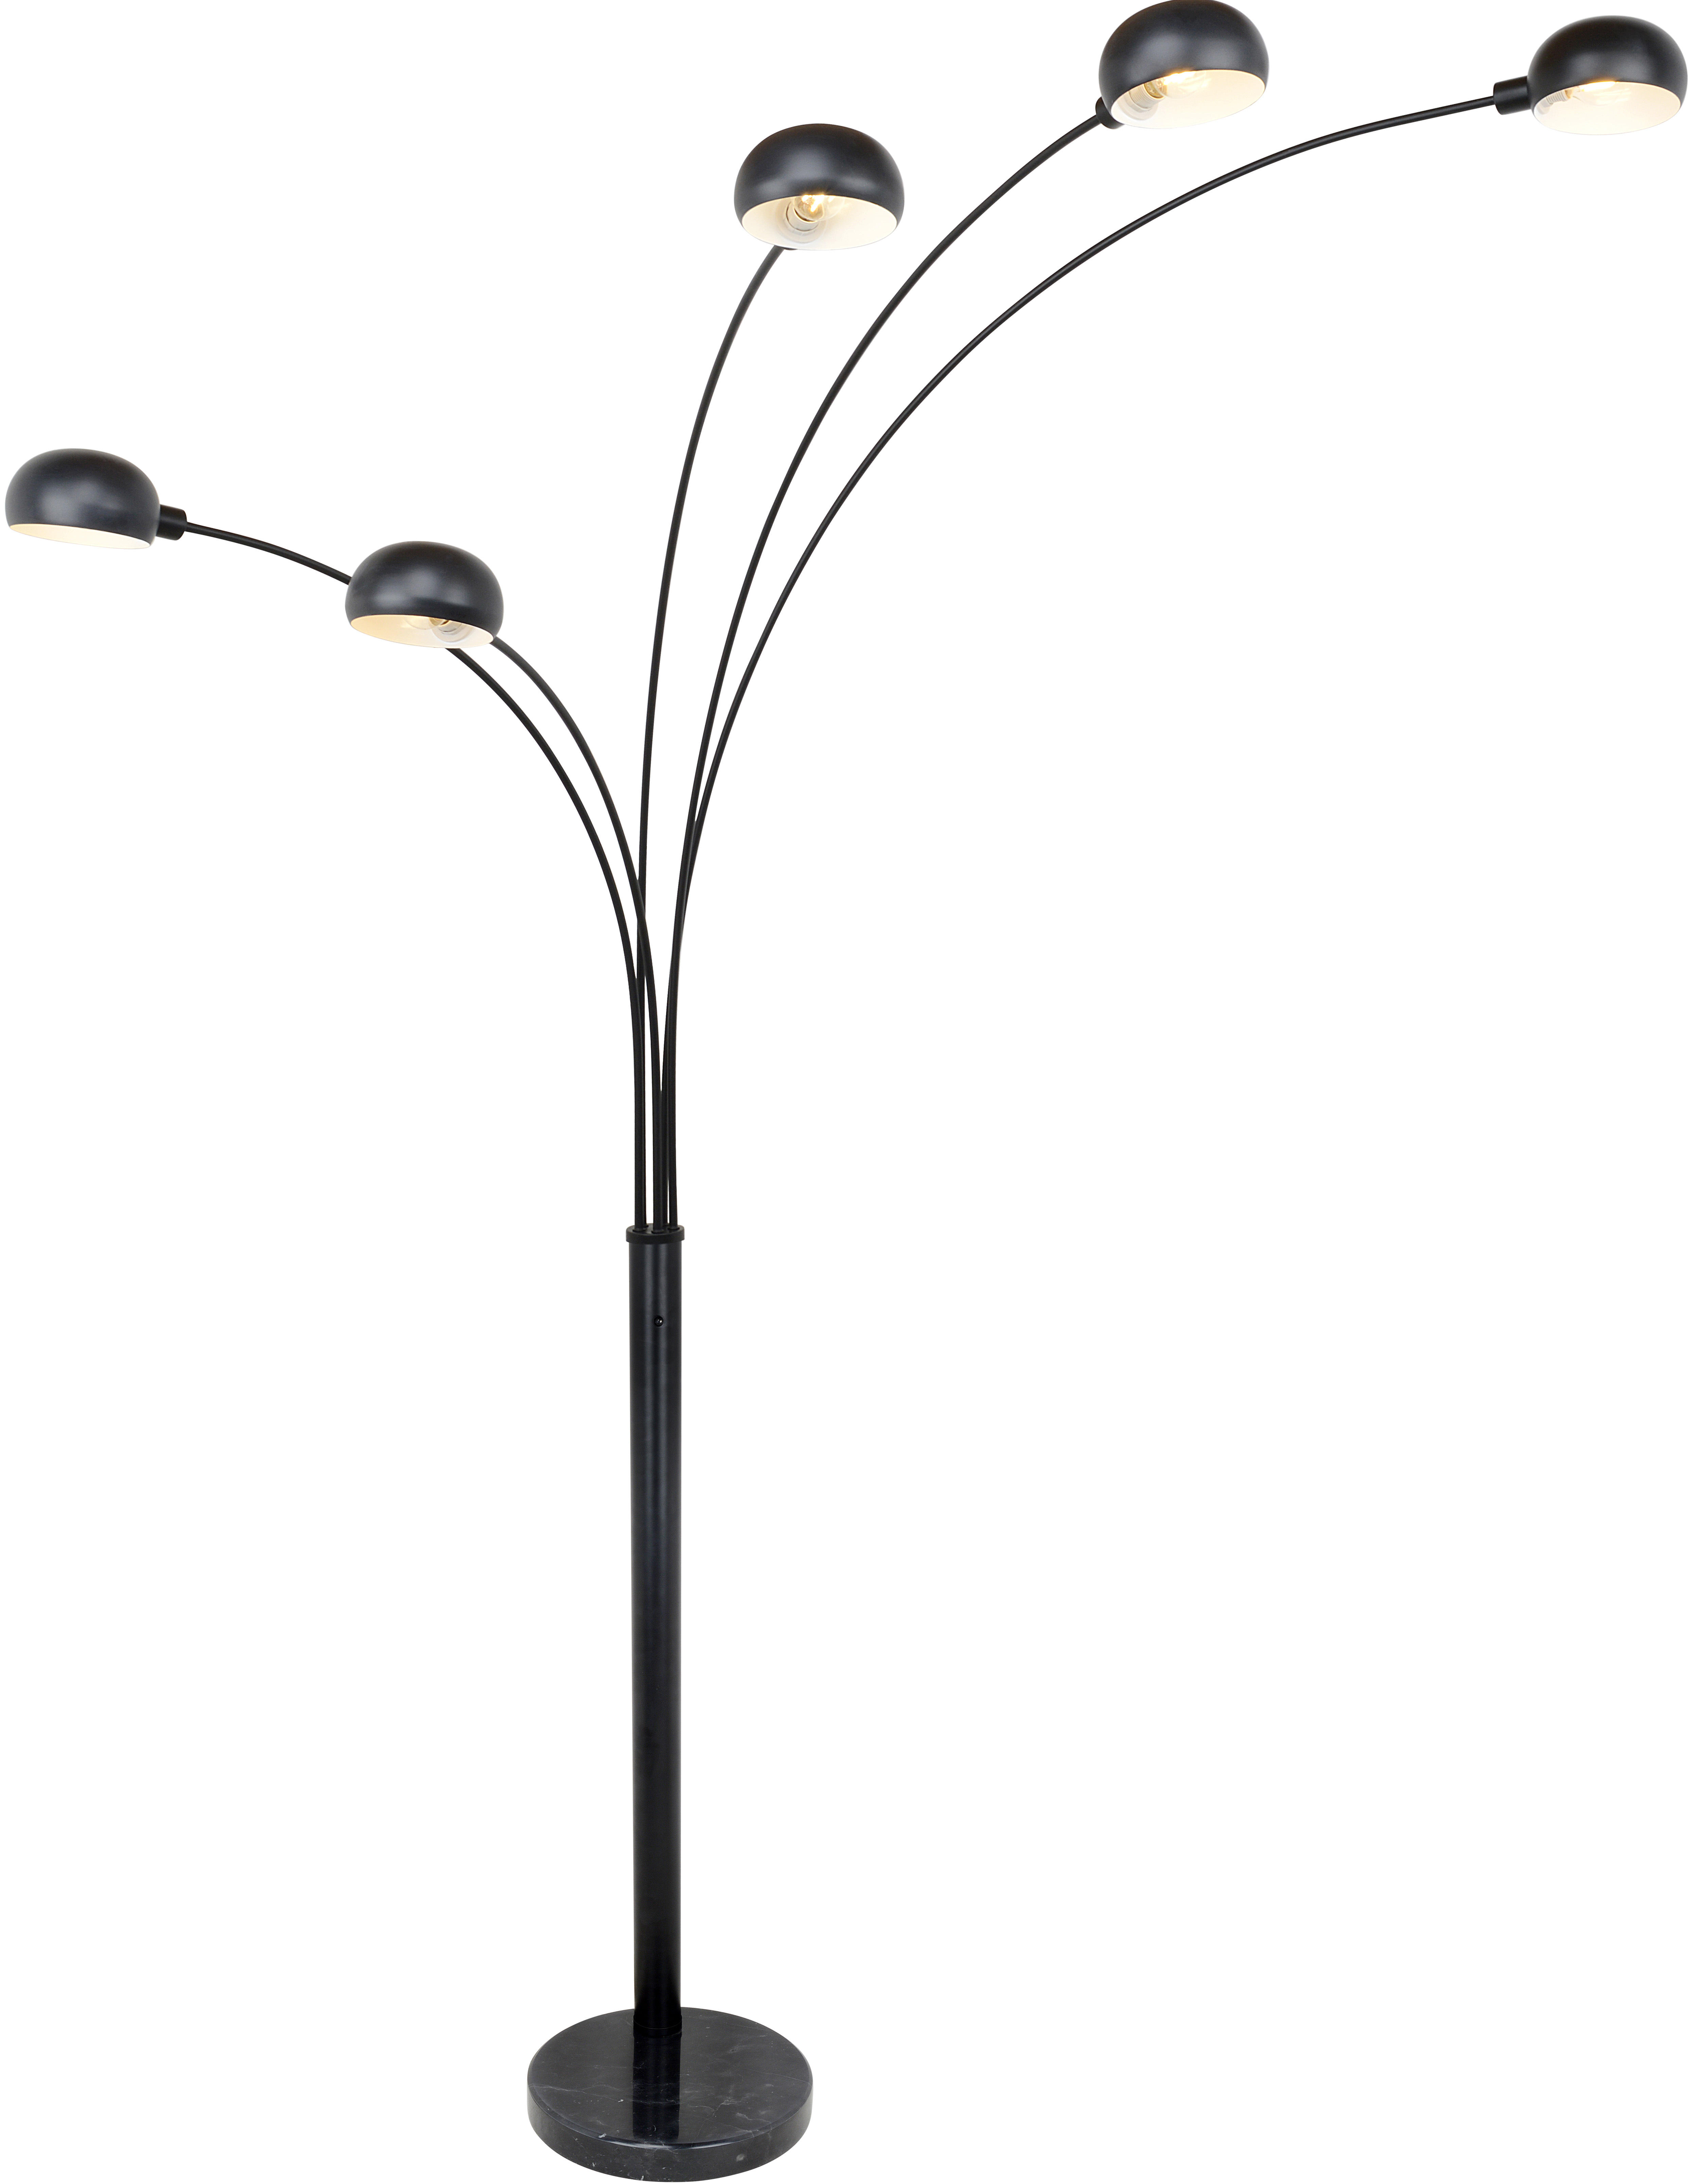 LAMPADAR CU PICIOR CURBAT - negru, Lifestyle, plastic/metal (130/120/210cm) - Novel